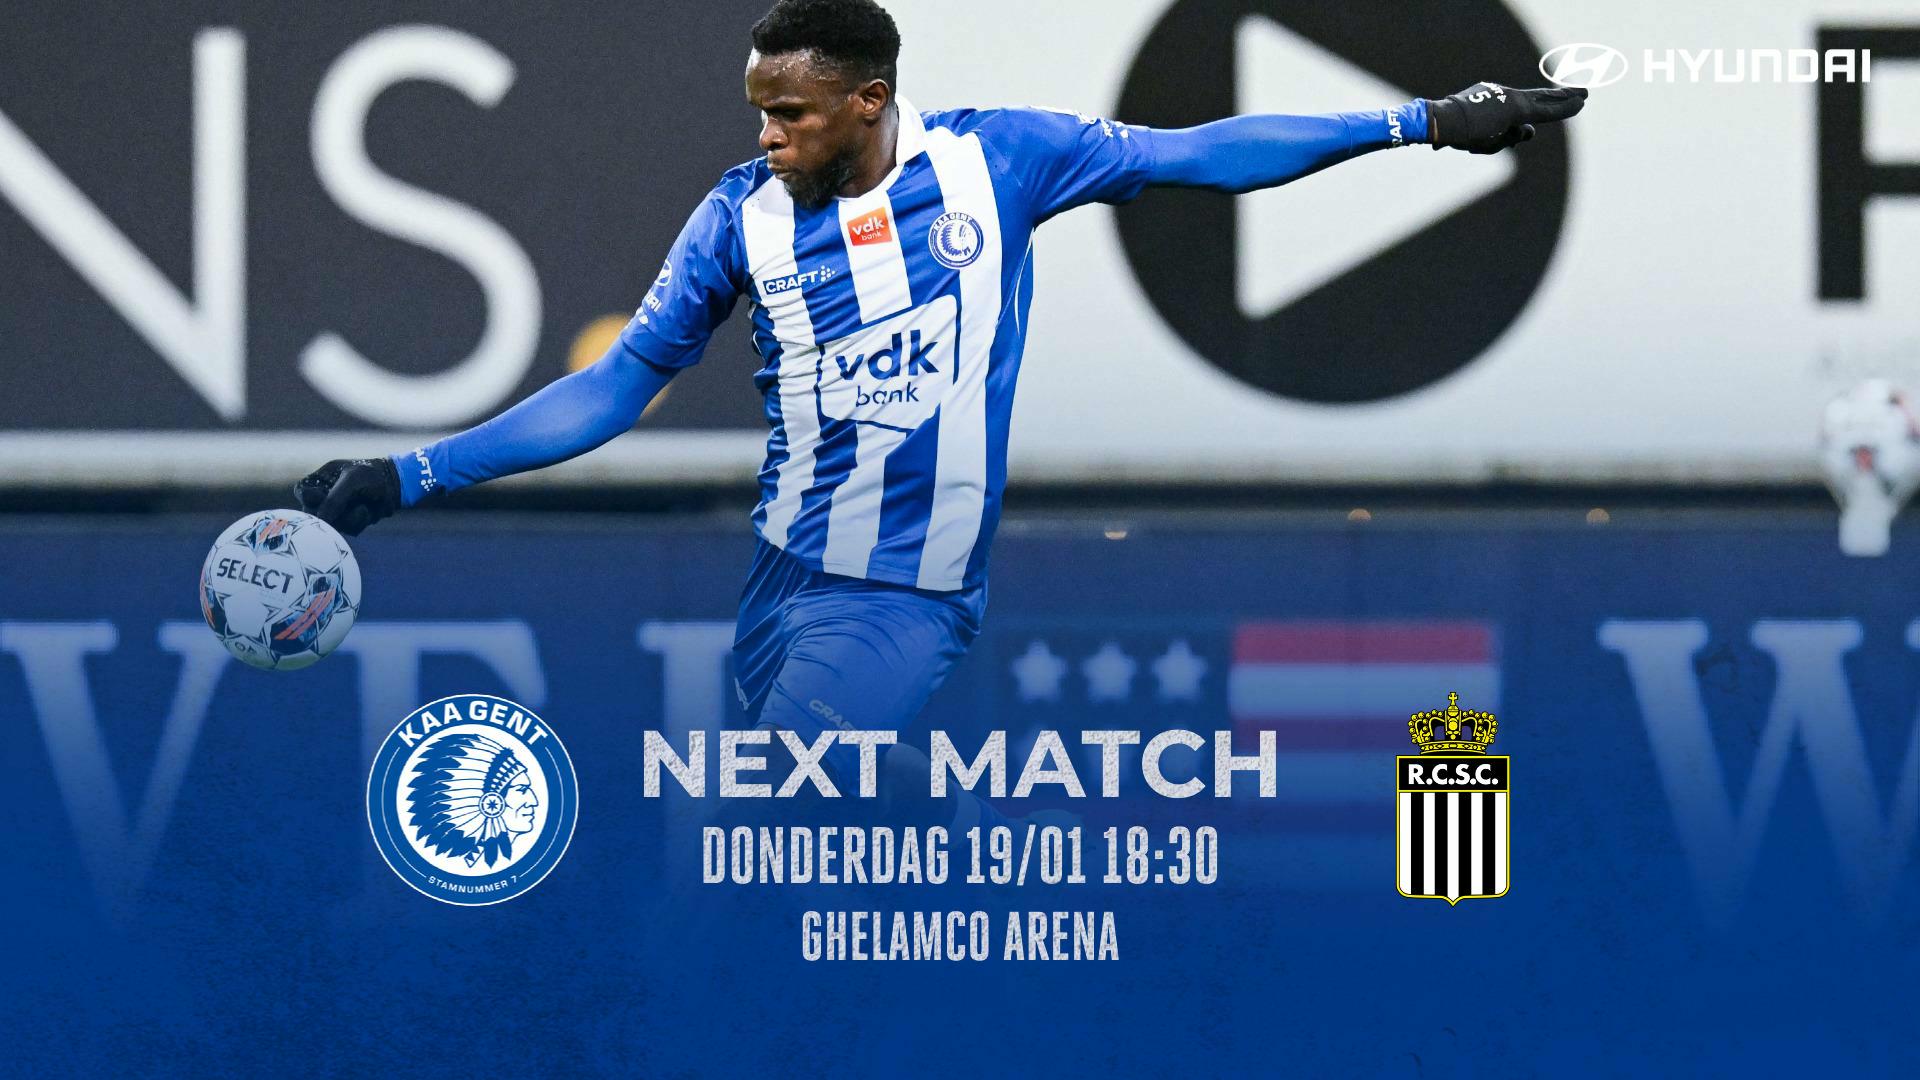 Next Match: KAA Gent - Sporting Charleroi